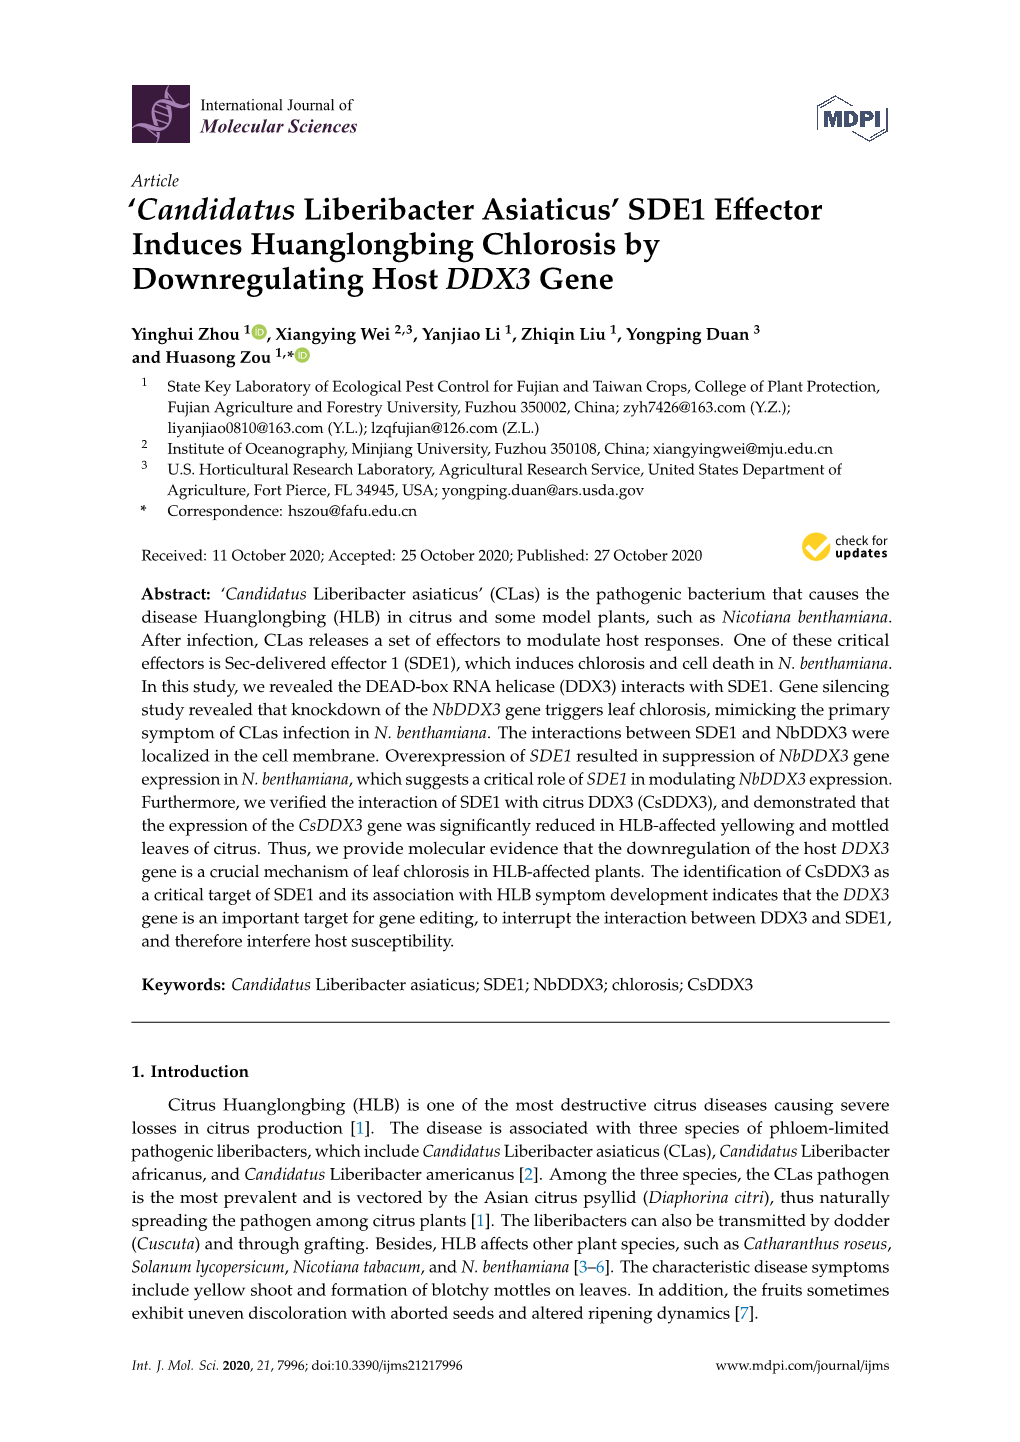 Candidatus Liberibacter Asiaticus’ SDE1 Eﬀector Induces Huanglongbing Chlorosis by Downregulating Host DDX3 Gene